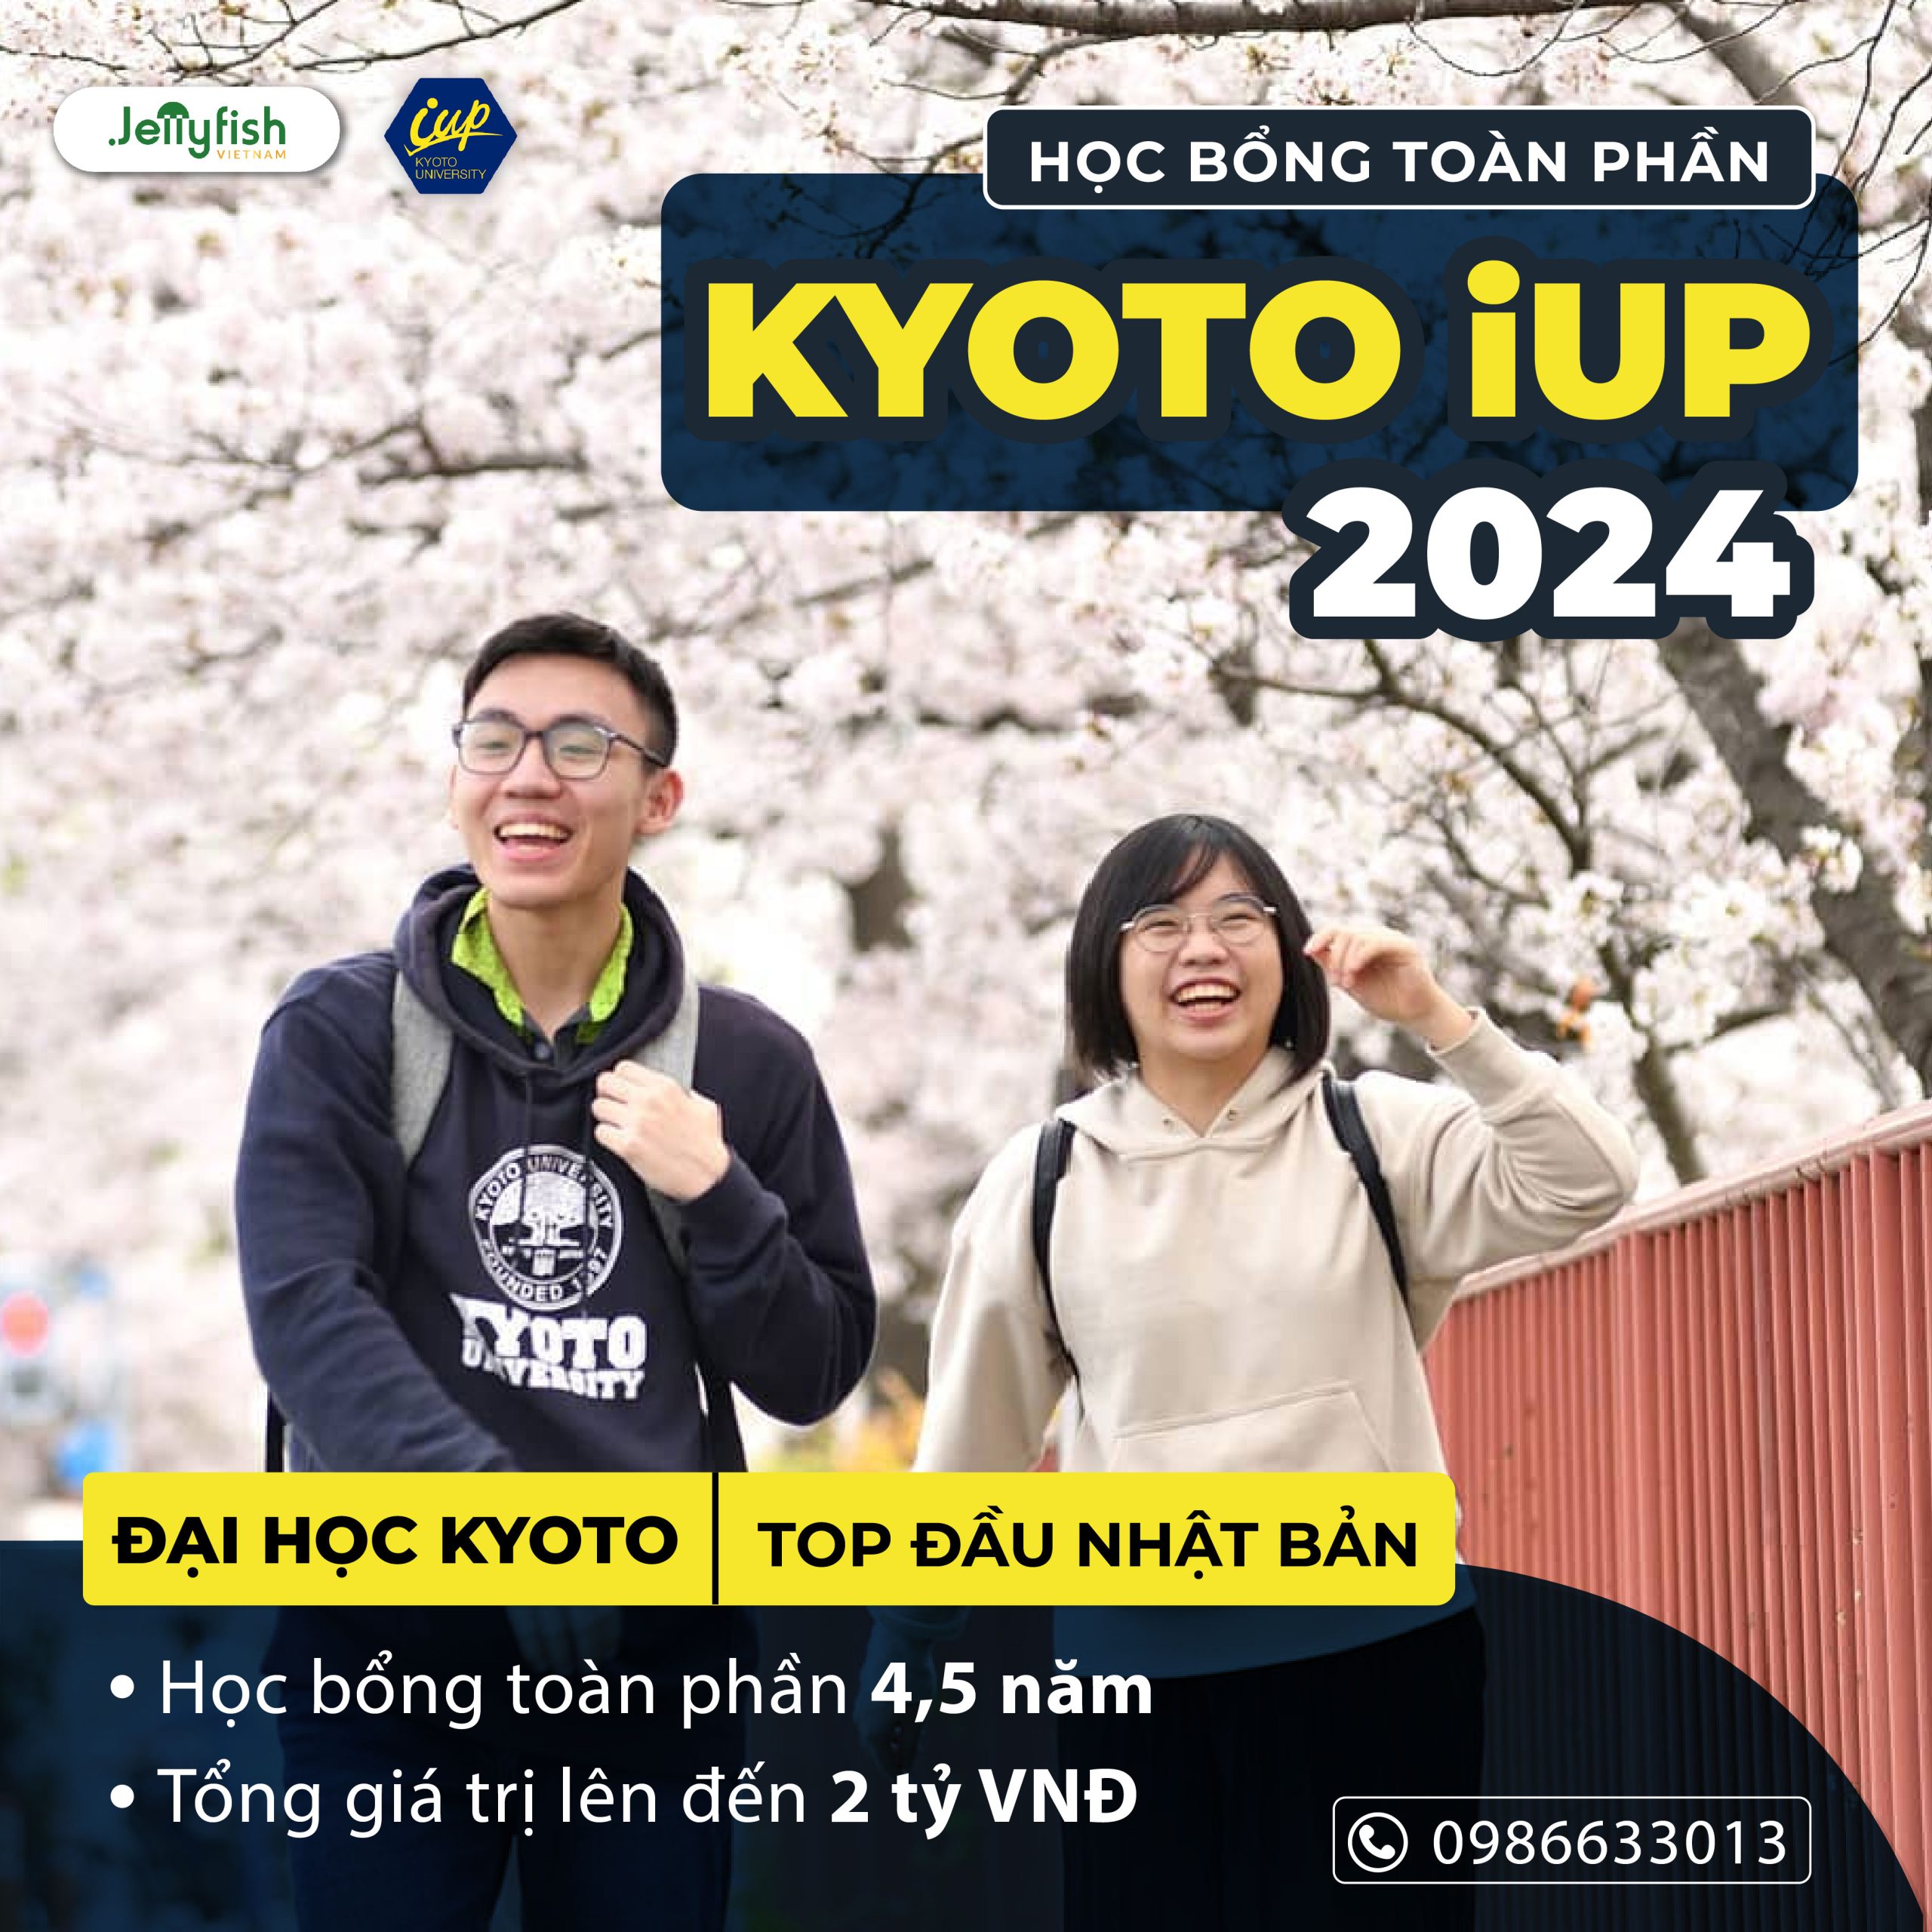 kyoto-iup-2024-900x900